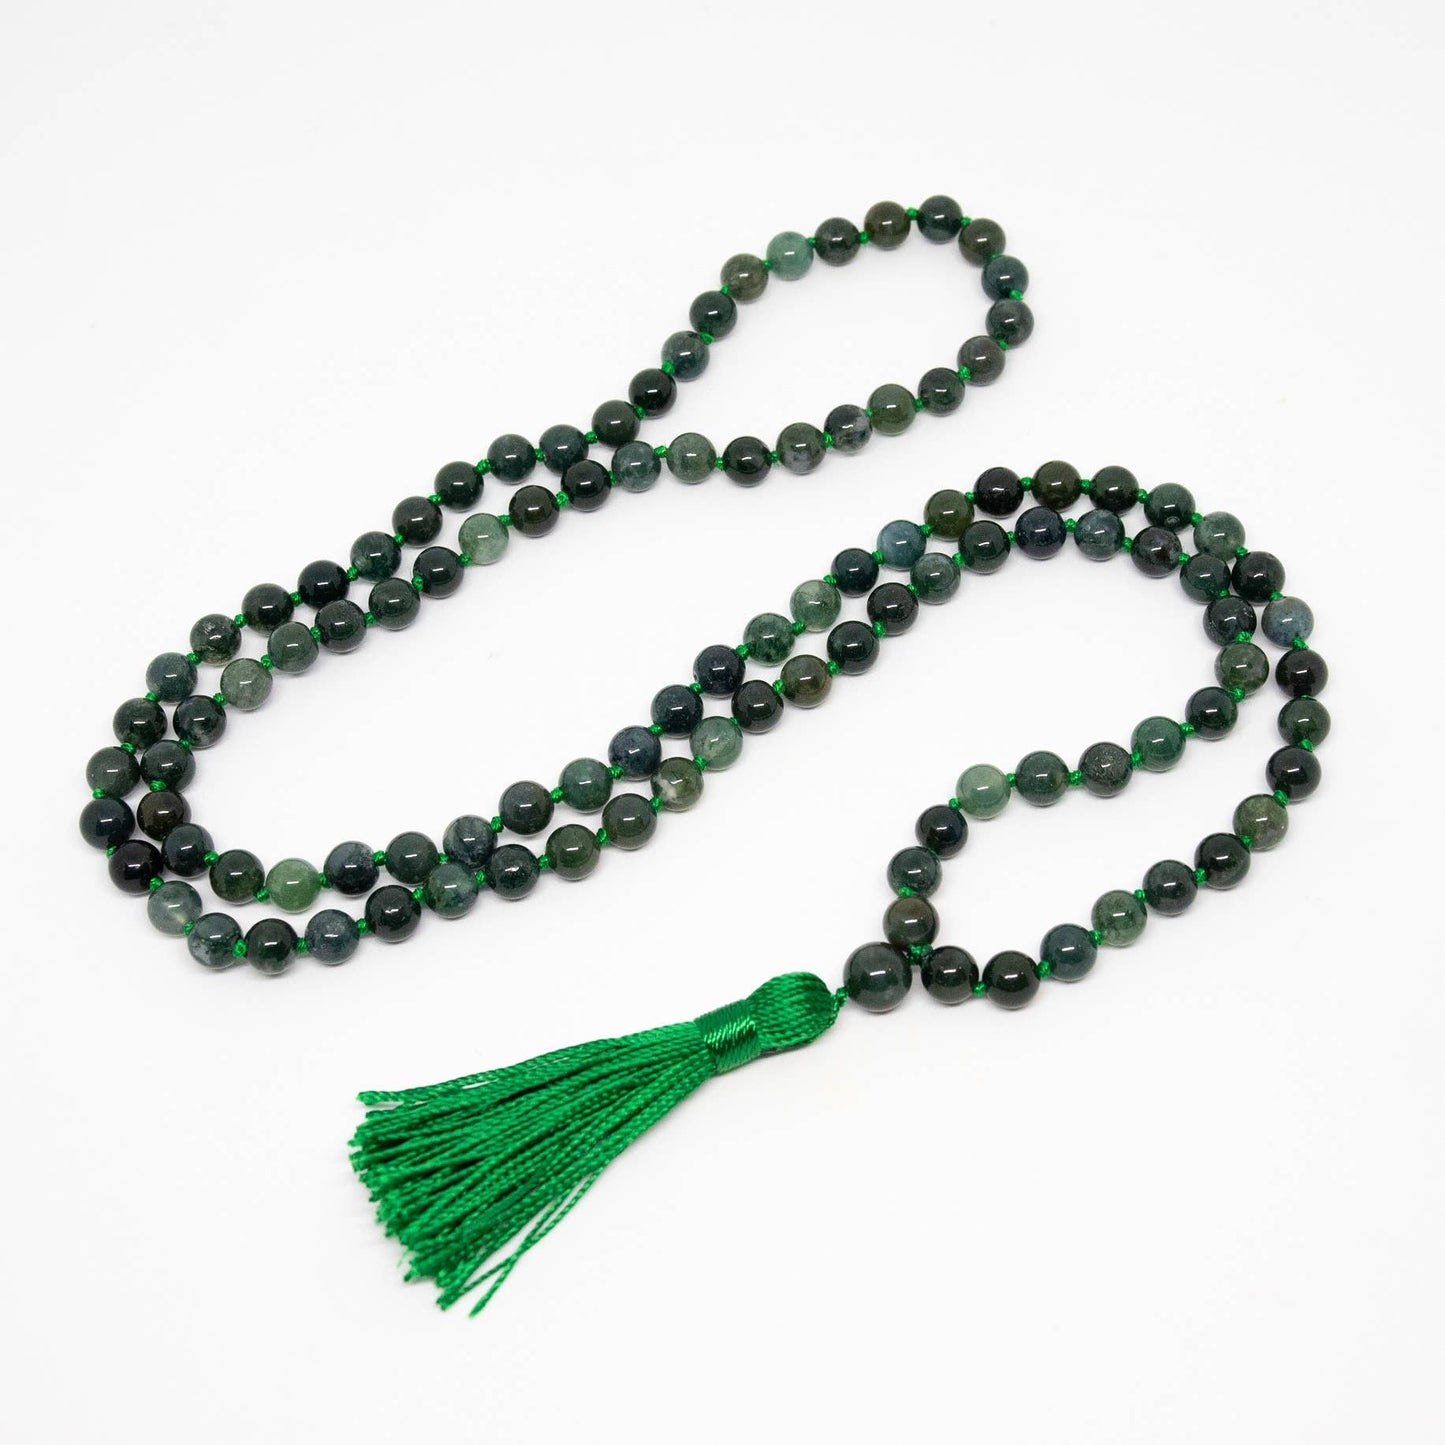 Moss Agate Knotted 108 Bead Mala - Prayer Beads - 8mm (1 Pack)